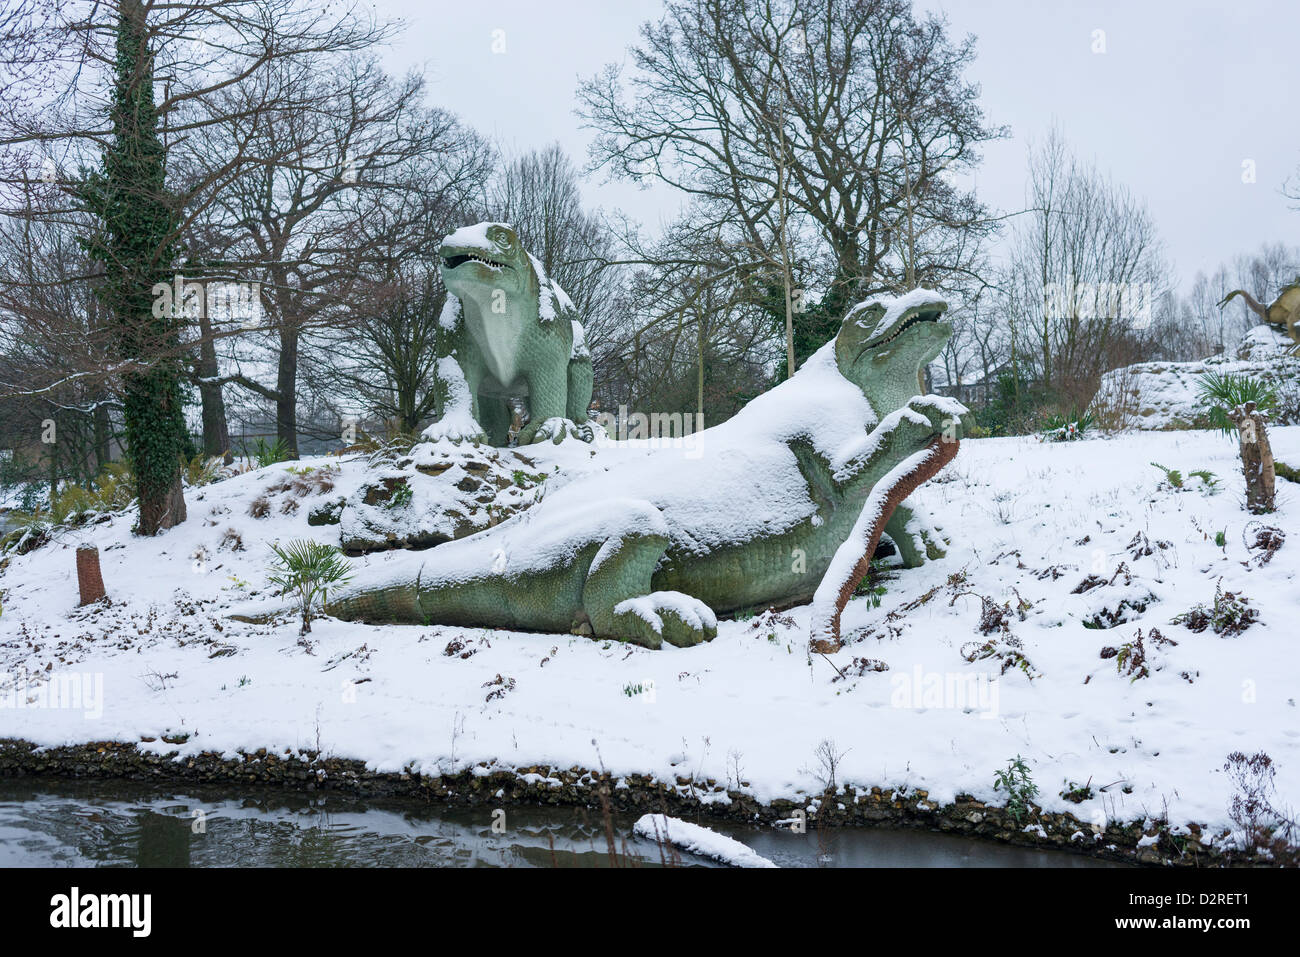 Snow covered Dinosaurs at Crystal Palace Park, London, UK Stock Photo